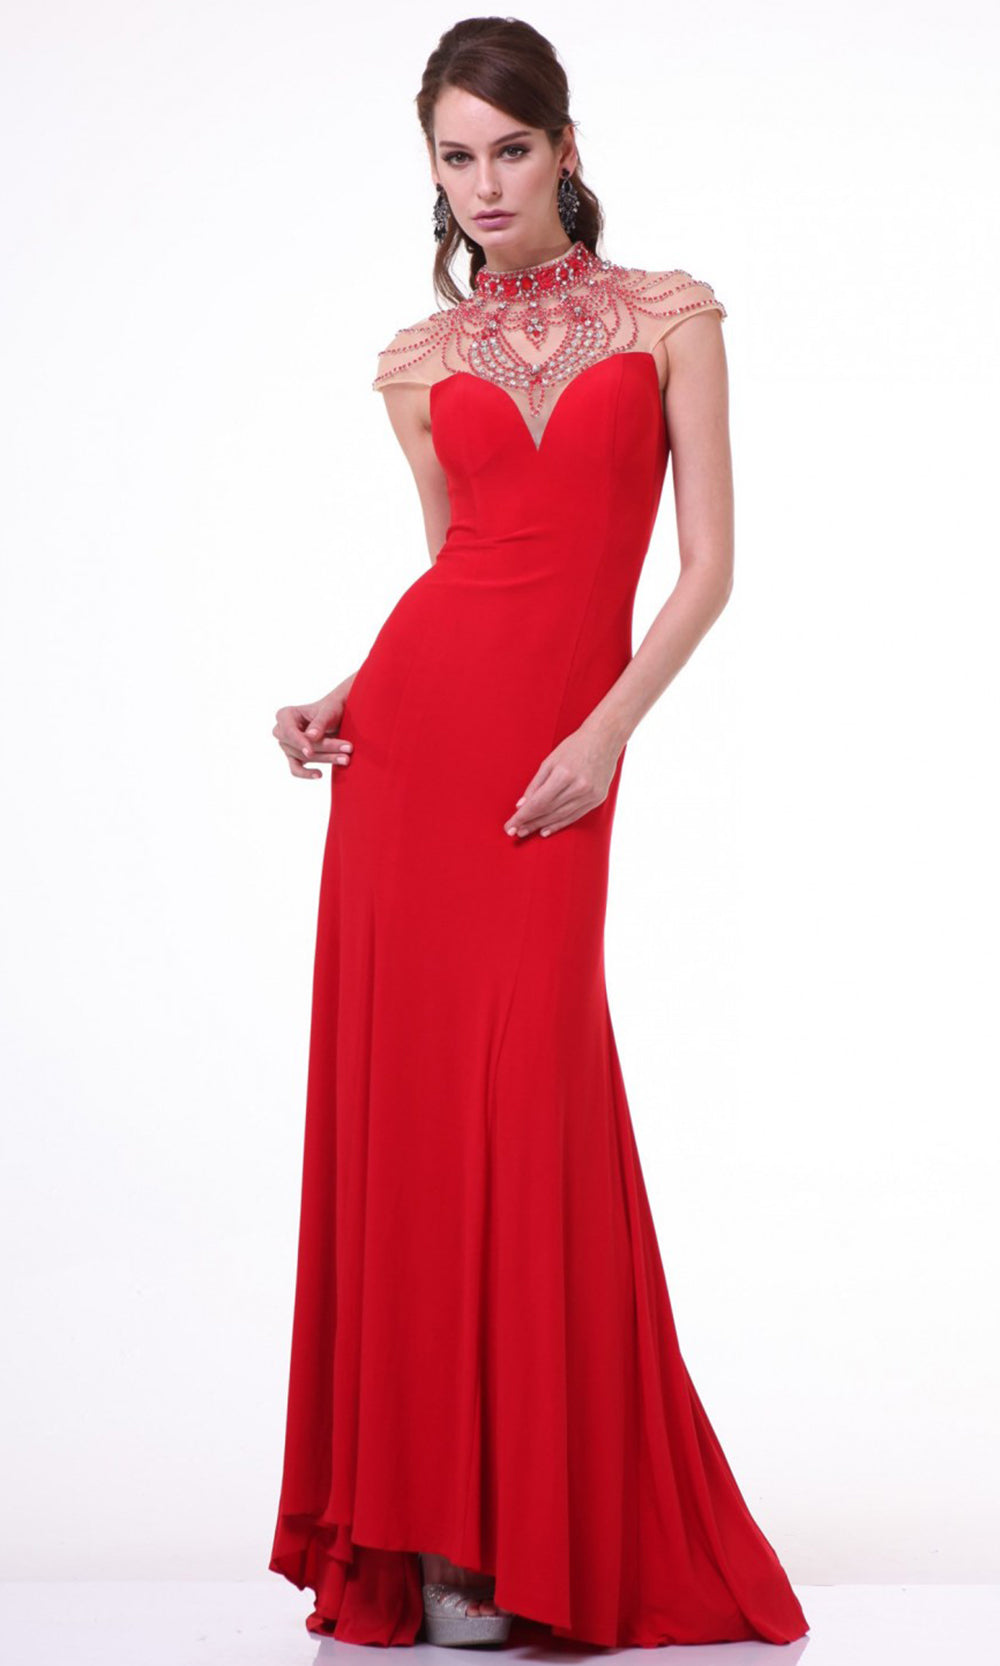 Cinderella Divine - 8105 Beaded Illusion Sheath Dress In Red